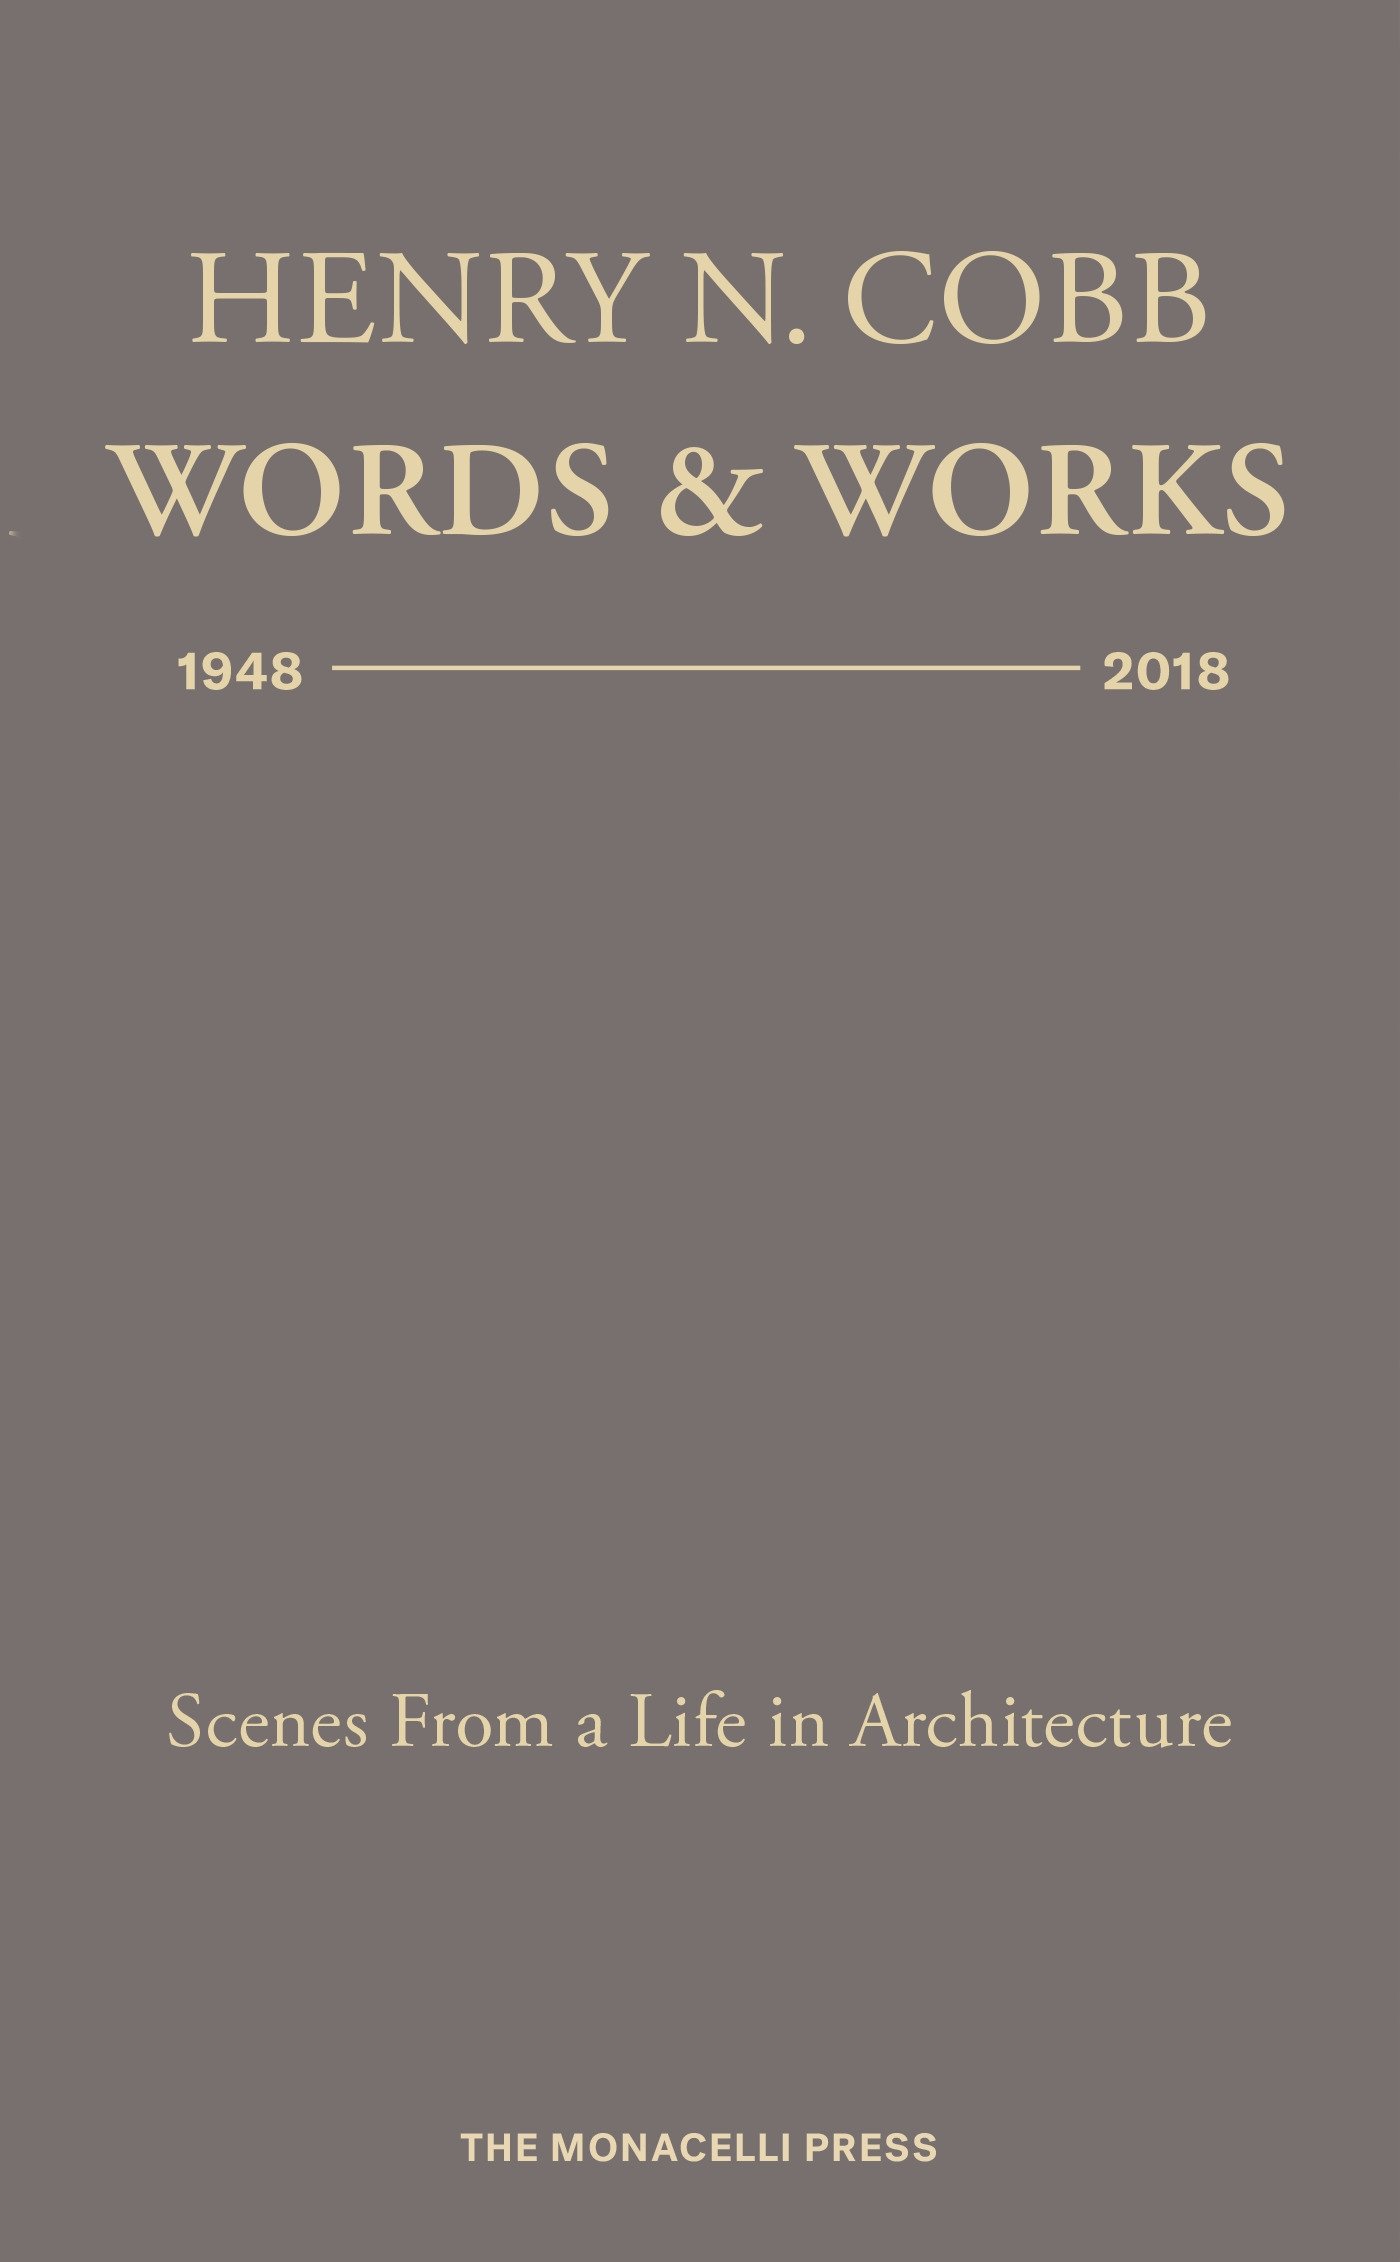 Henry N. Cobb: Words & Works 1948-2018 | HENRY N. COBB